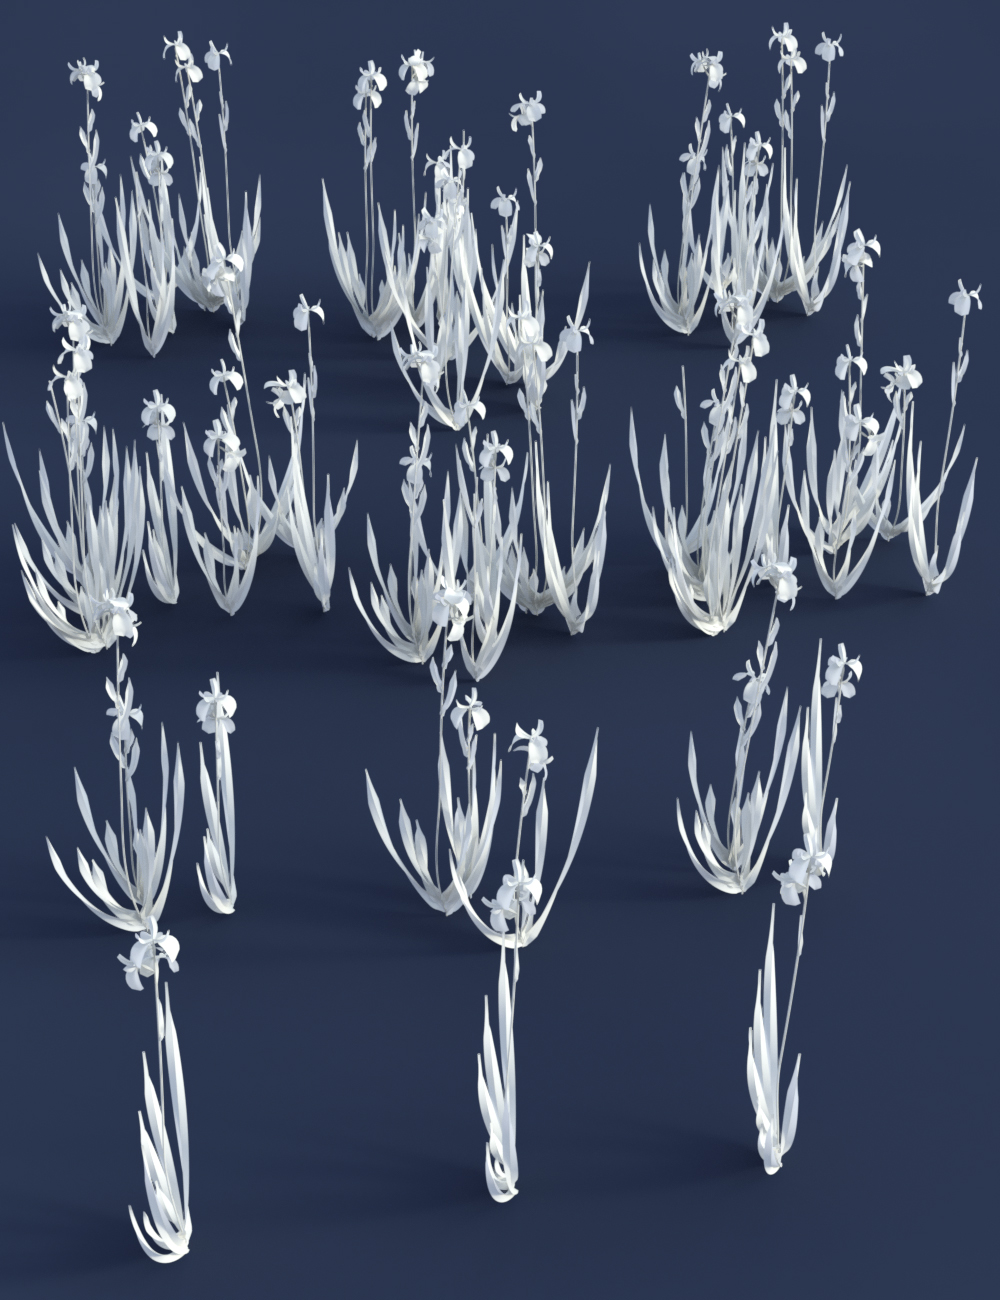 Water Iris - High Res Flowering Plants by: MartinJFrost, 3D Models by Daz 3D